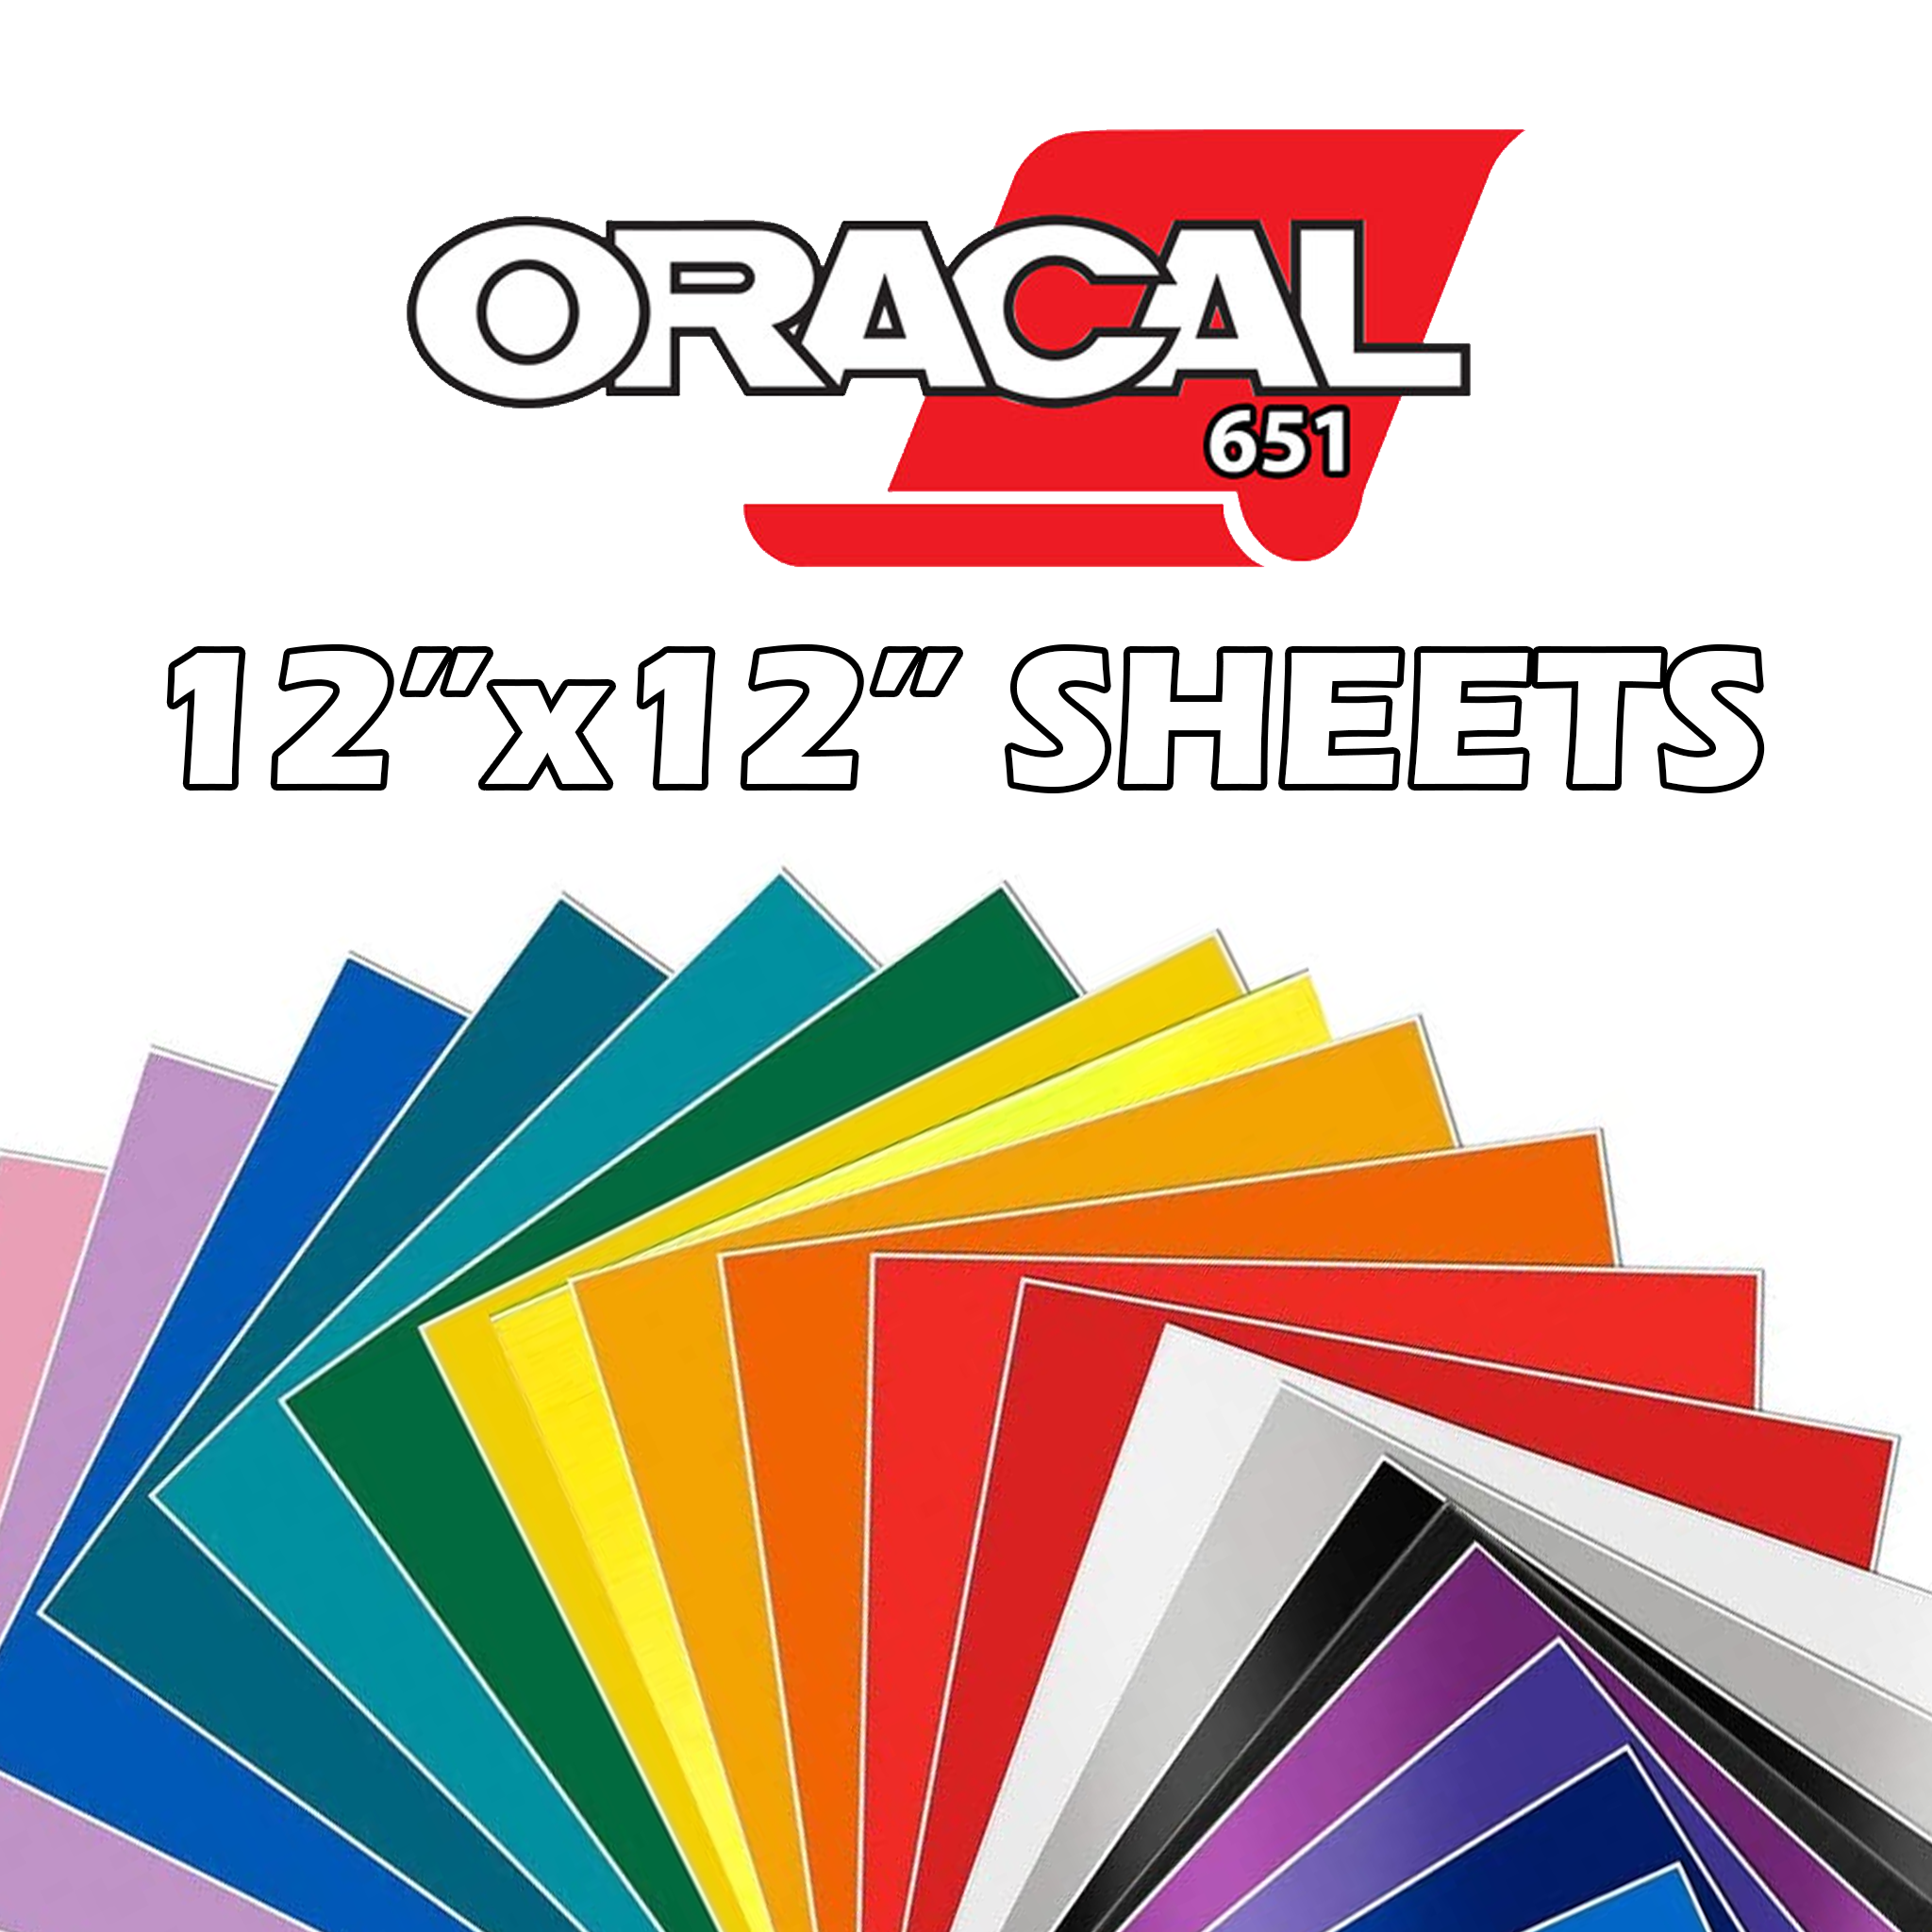 Oracal 651 Intermediate Vinyl Sheets, Matte Black